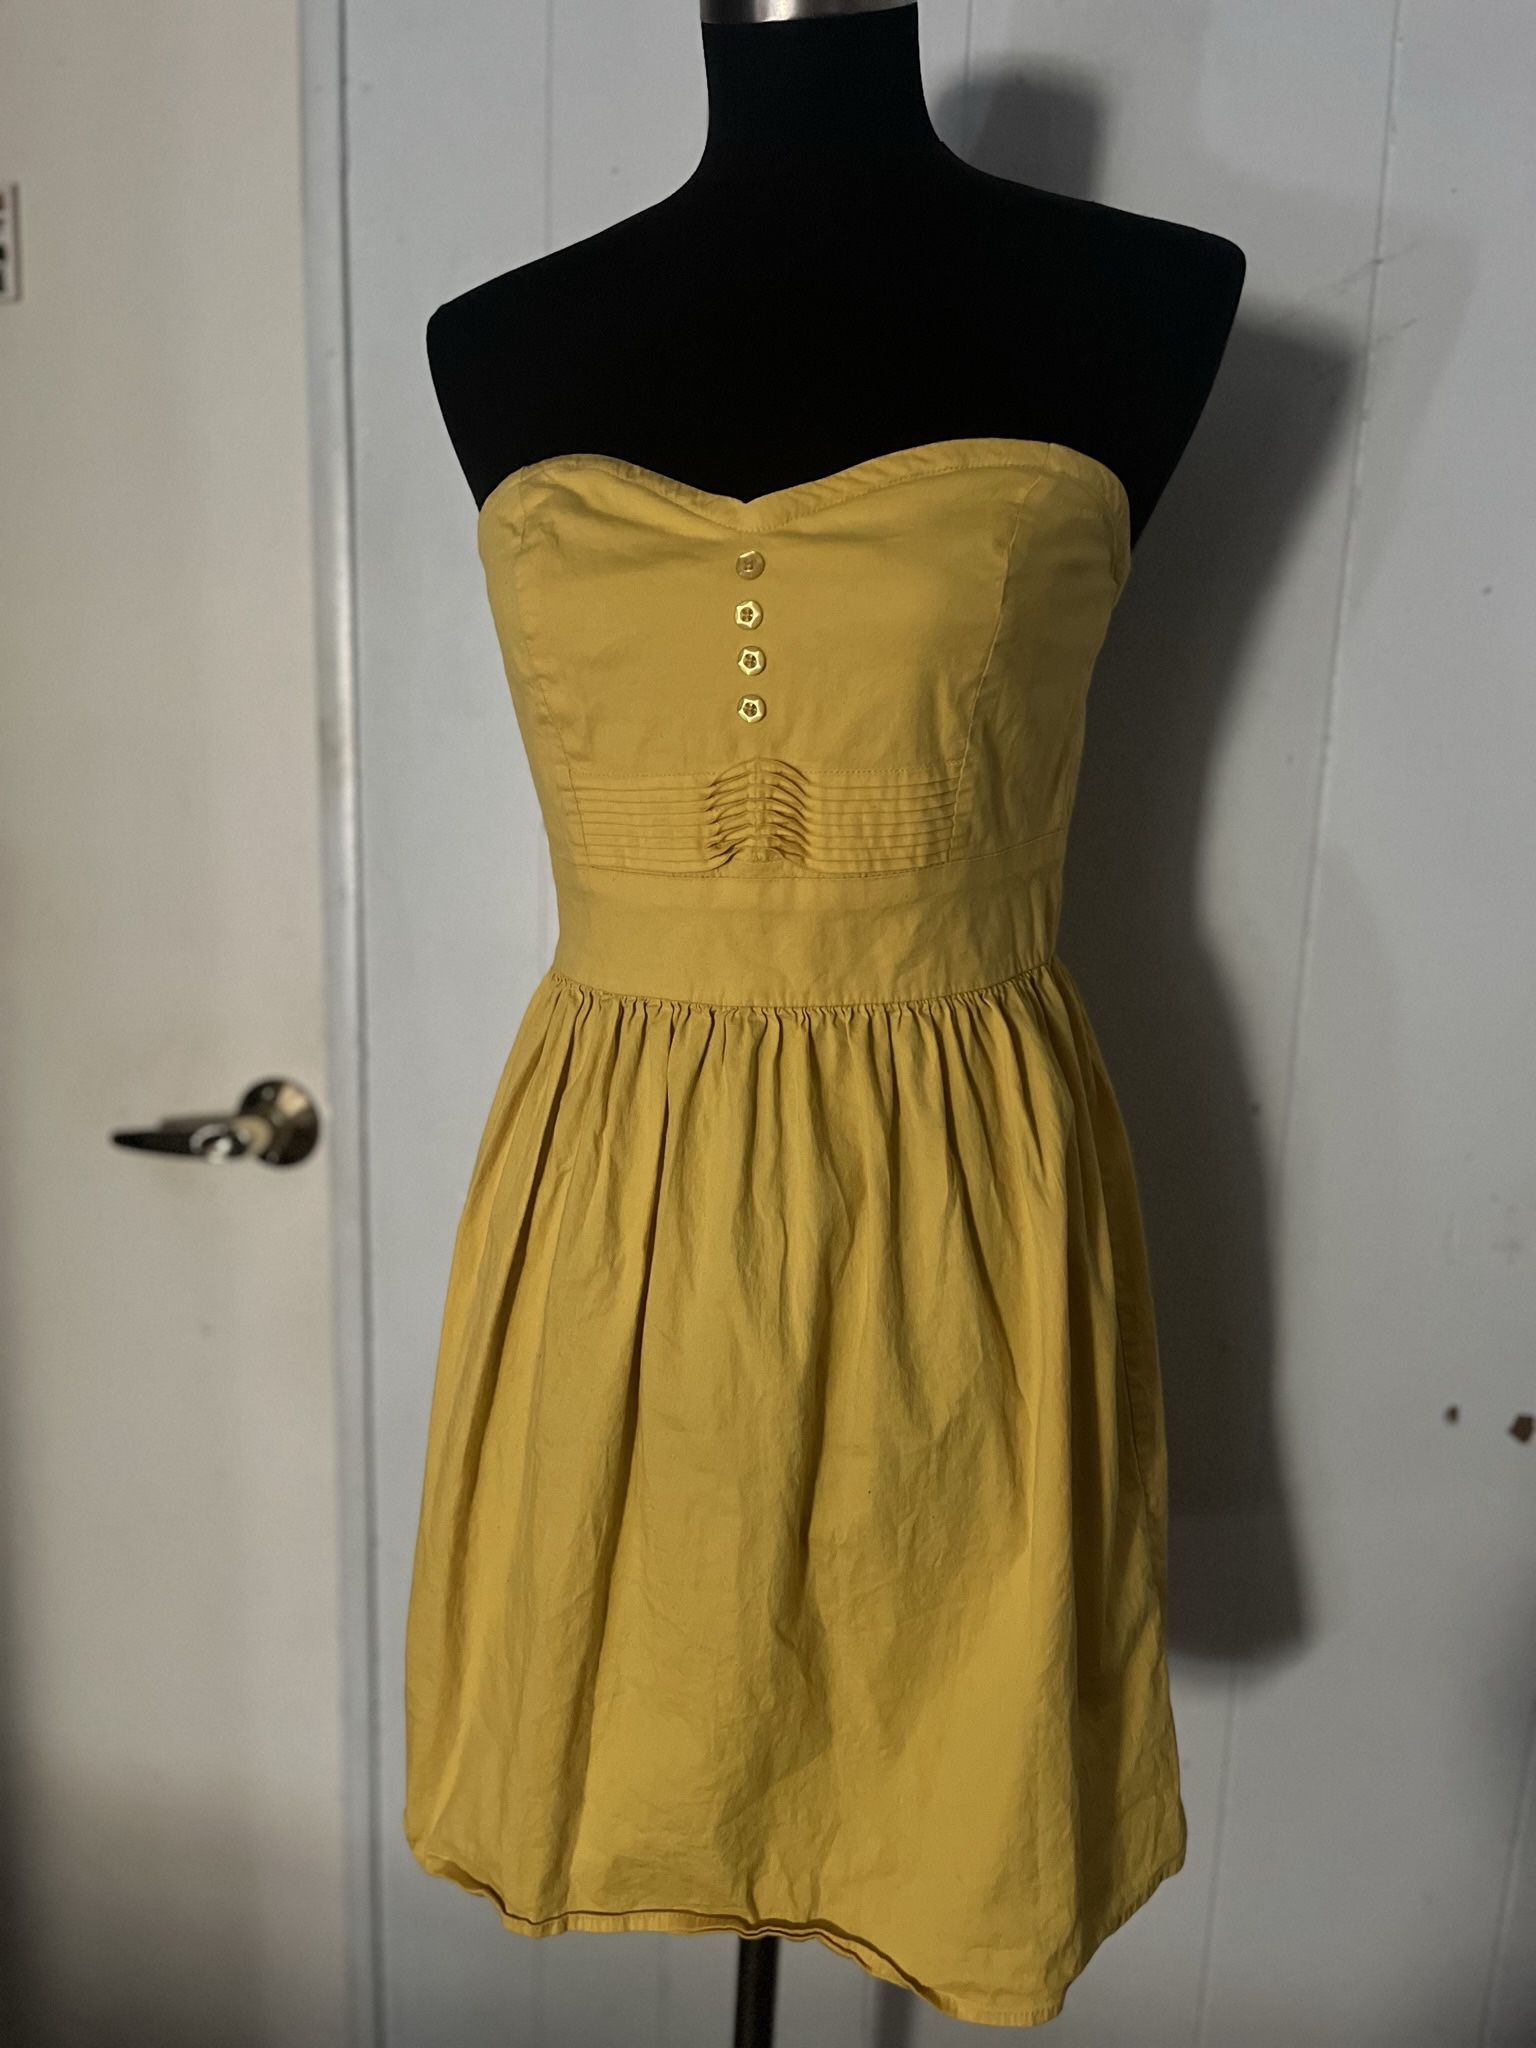 Yellow Sleeveless Dress 